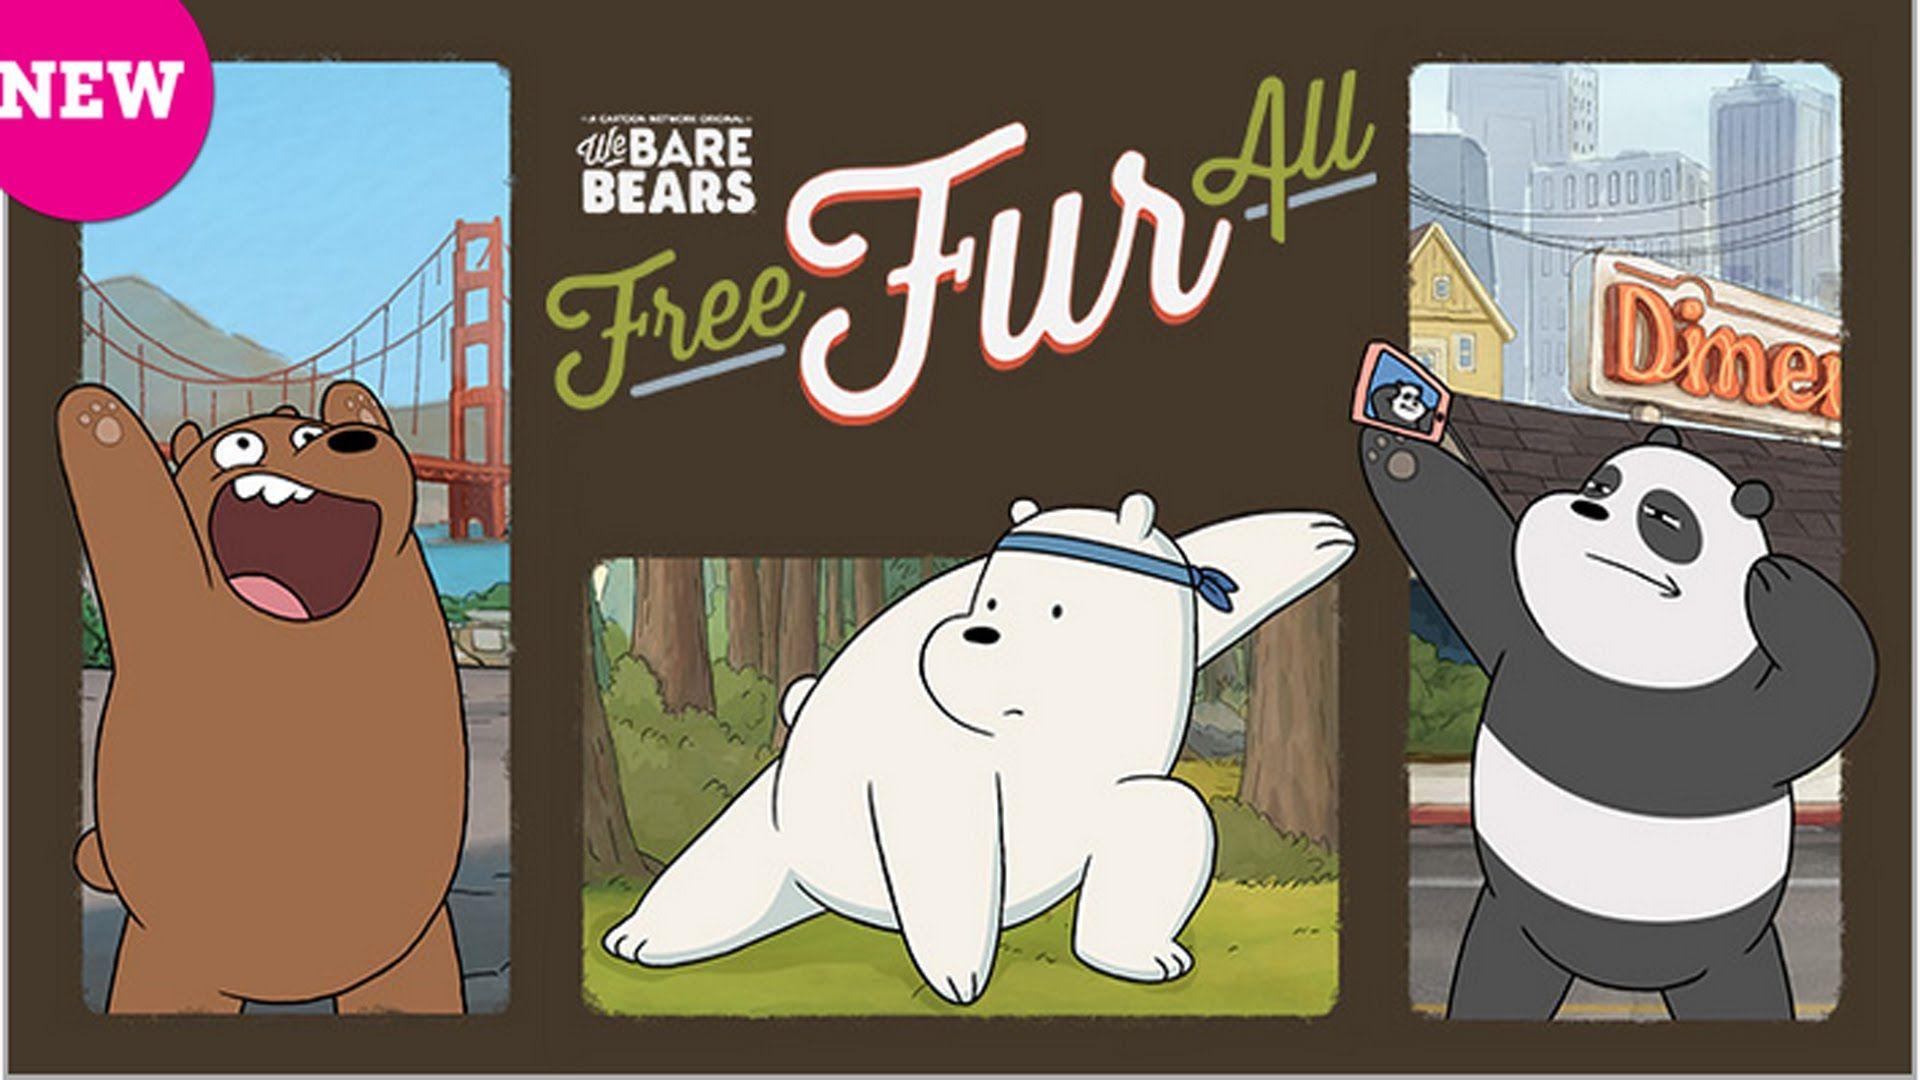 Ice Bear Rules All!. Free Fur All. We Bare Bears Cartoon Network